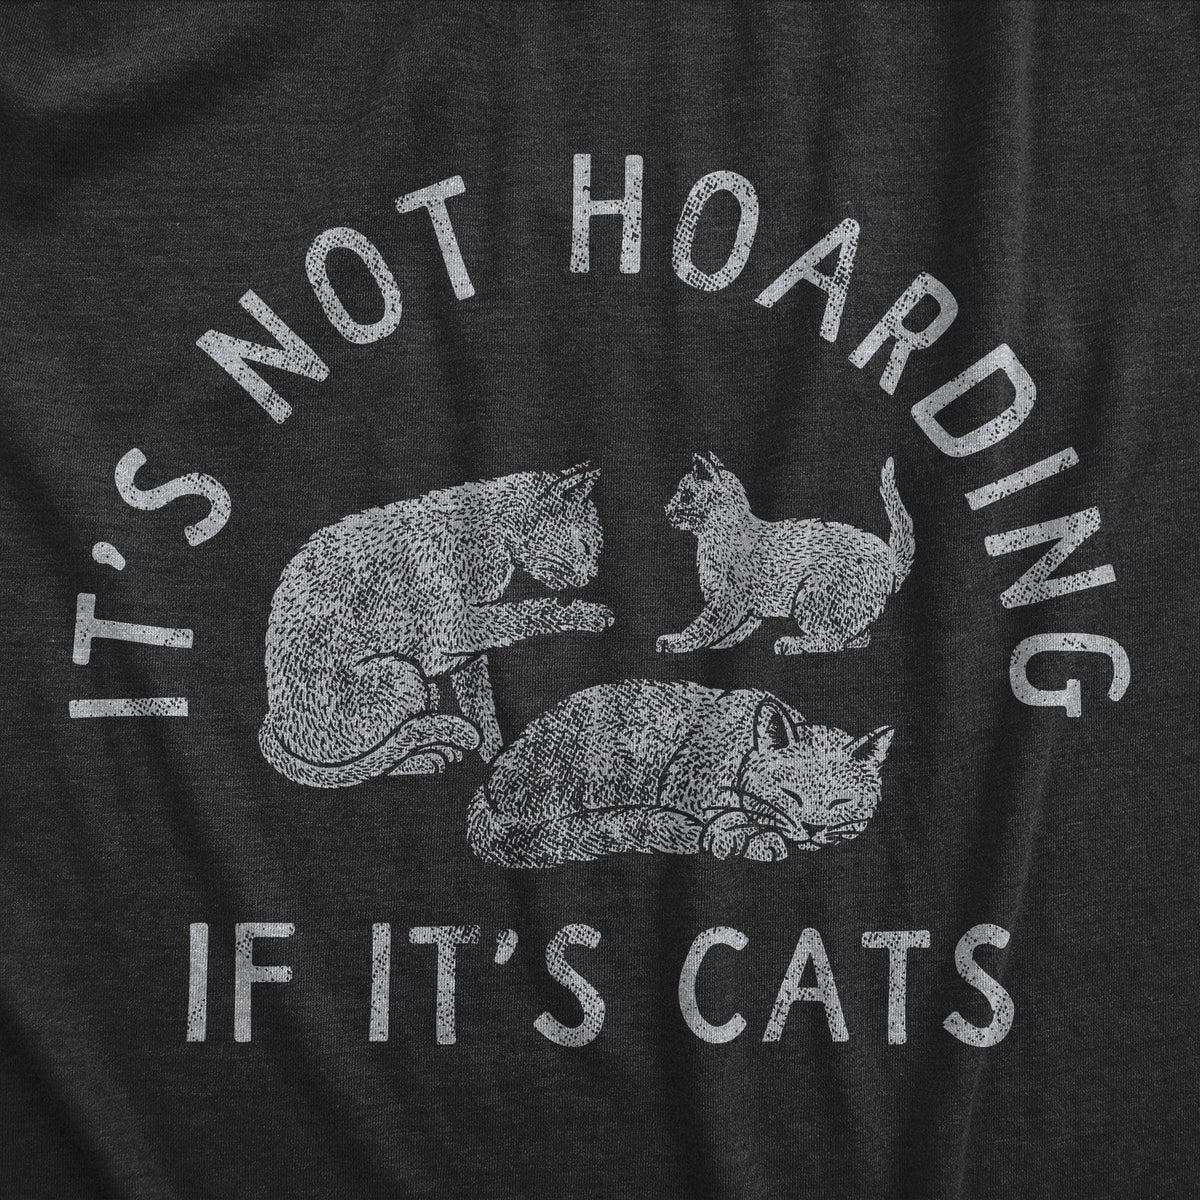 Its Not Hoarding If Its Cats Men&#39;s Tshirt  -  Crazy Dog T-Shirts